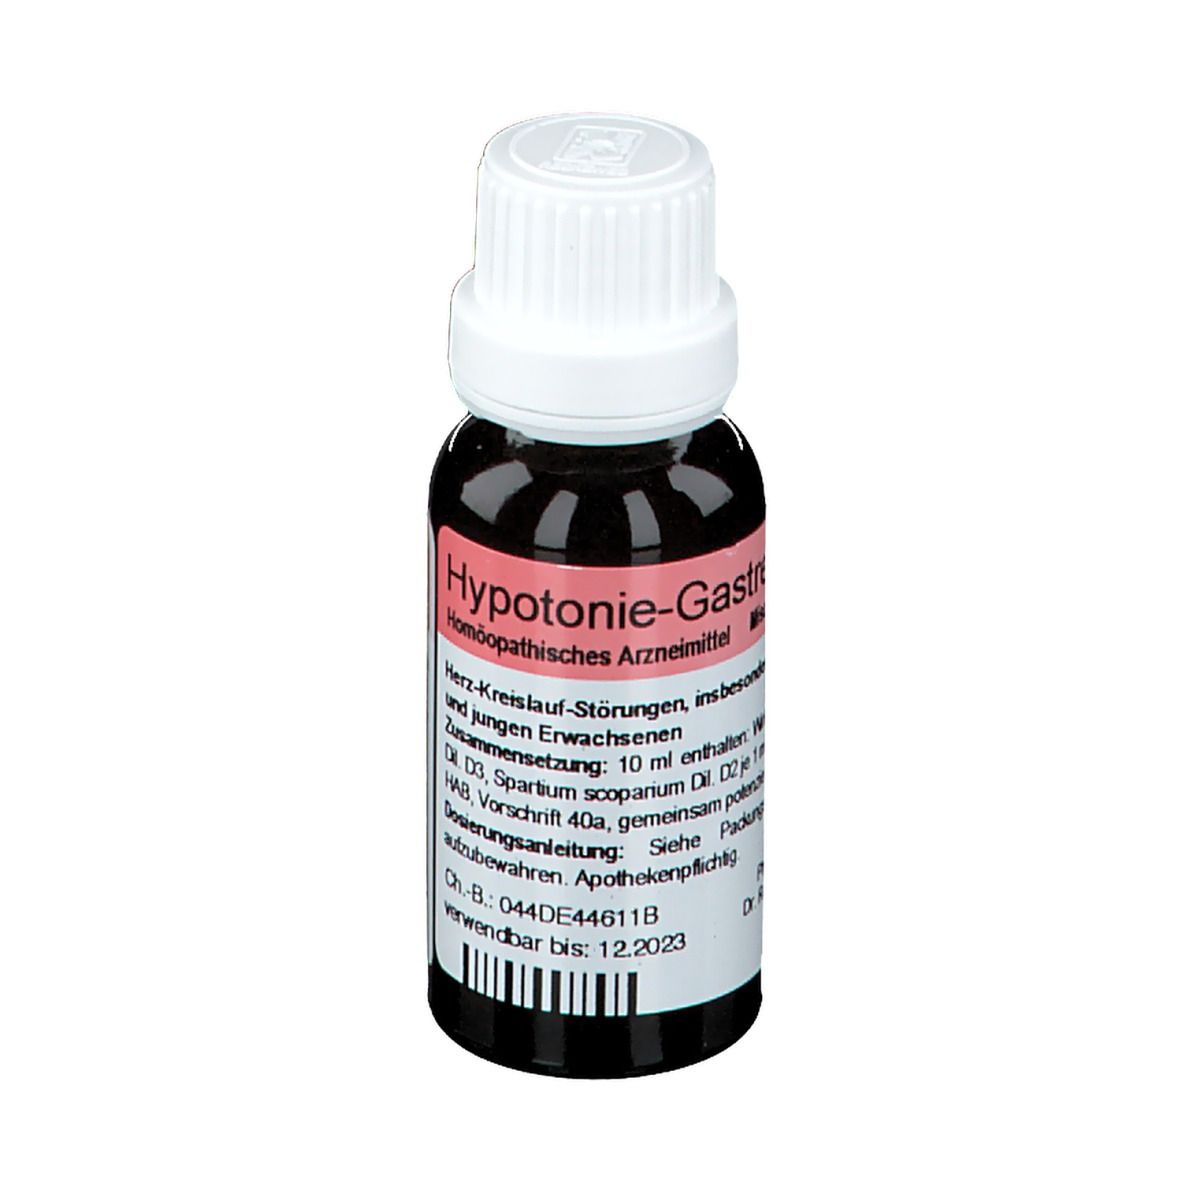 Hypotonie-Gastreu® R 44